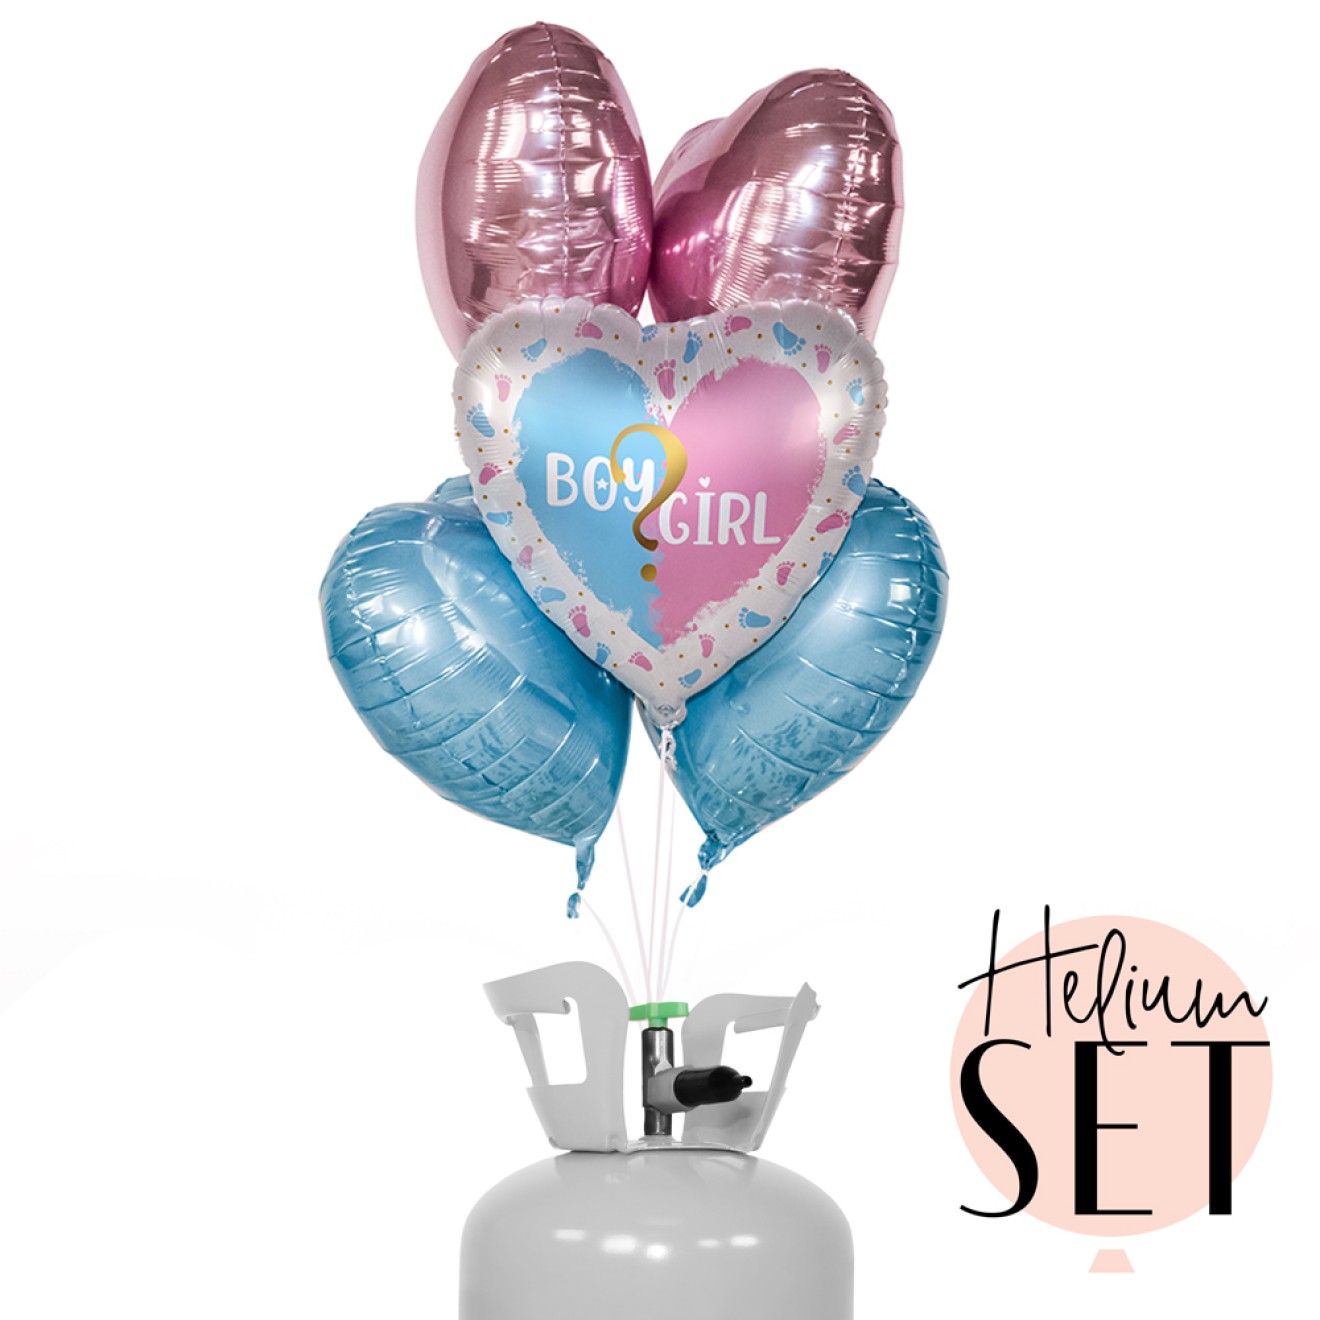 Helium Set - Gender Party